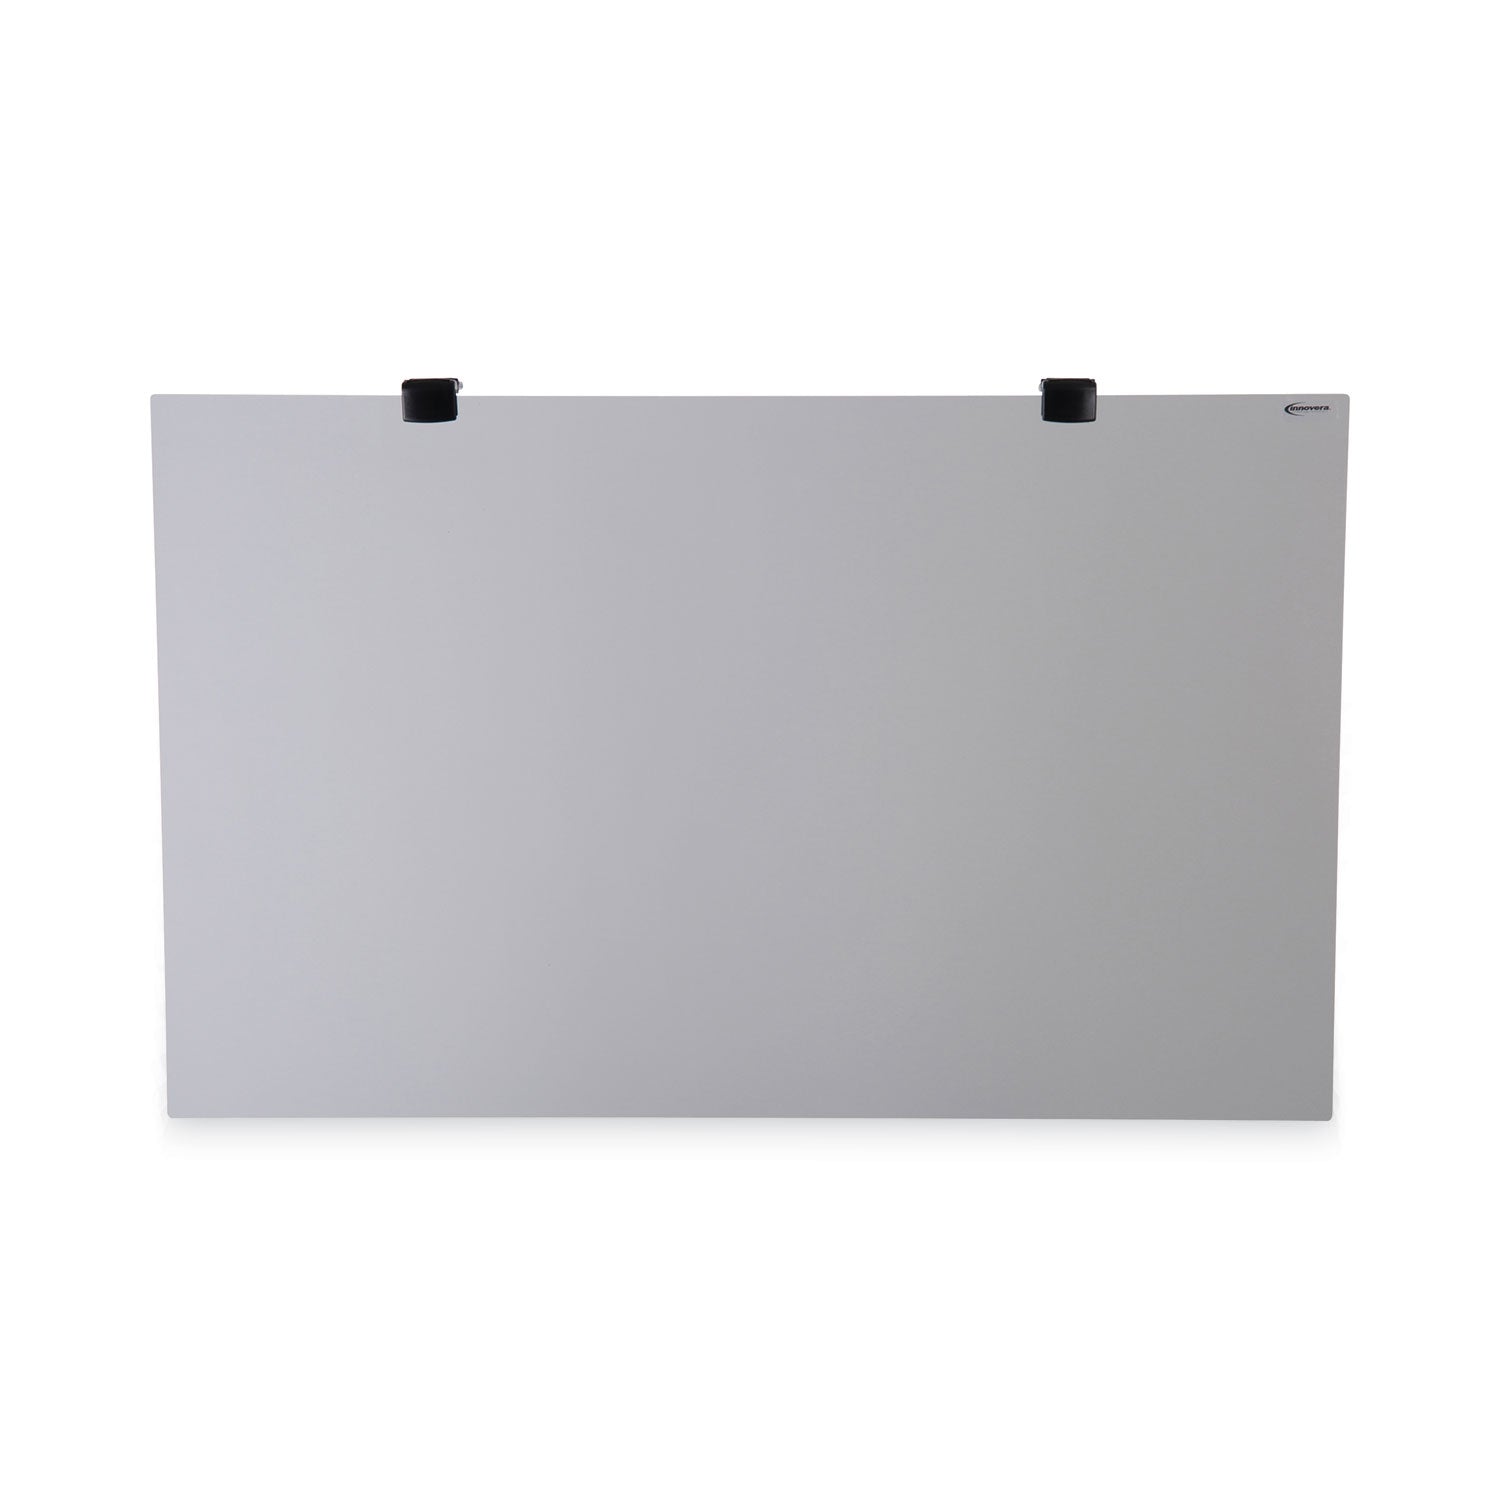 Protective Antiglare LCD Monitor Filter for 24" Widescreen Flat Panel Monitor, 16:9/16:10 Aspect Ratio - 